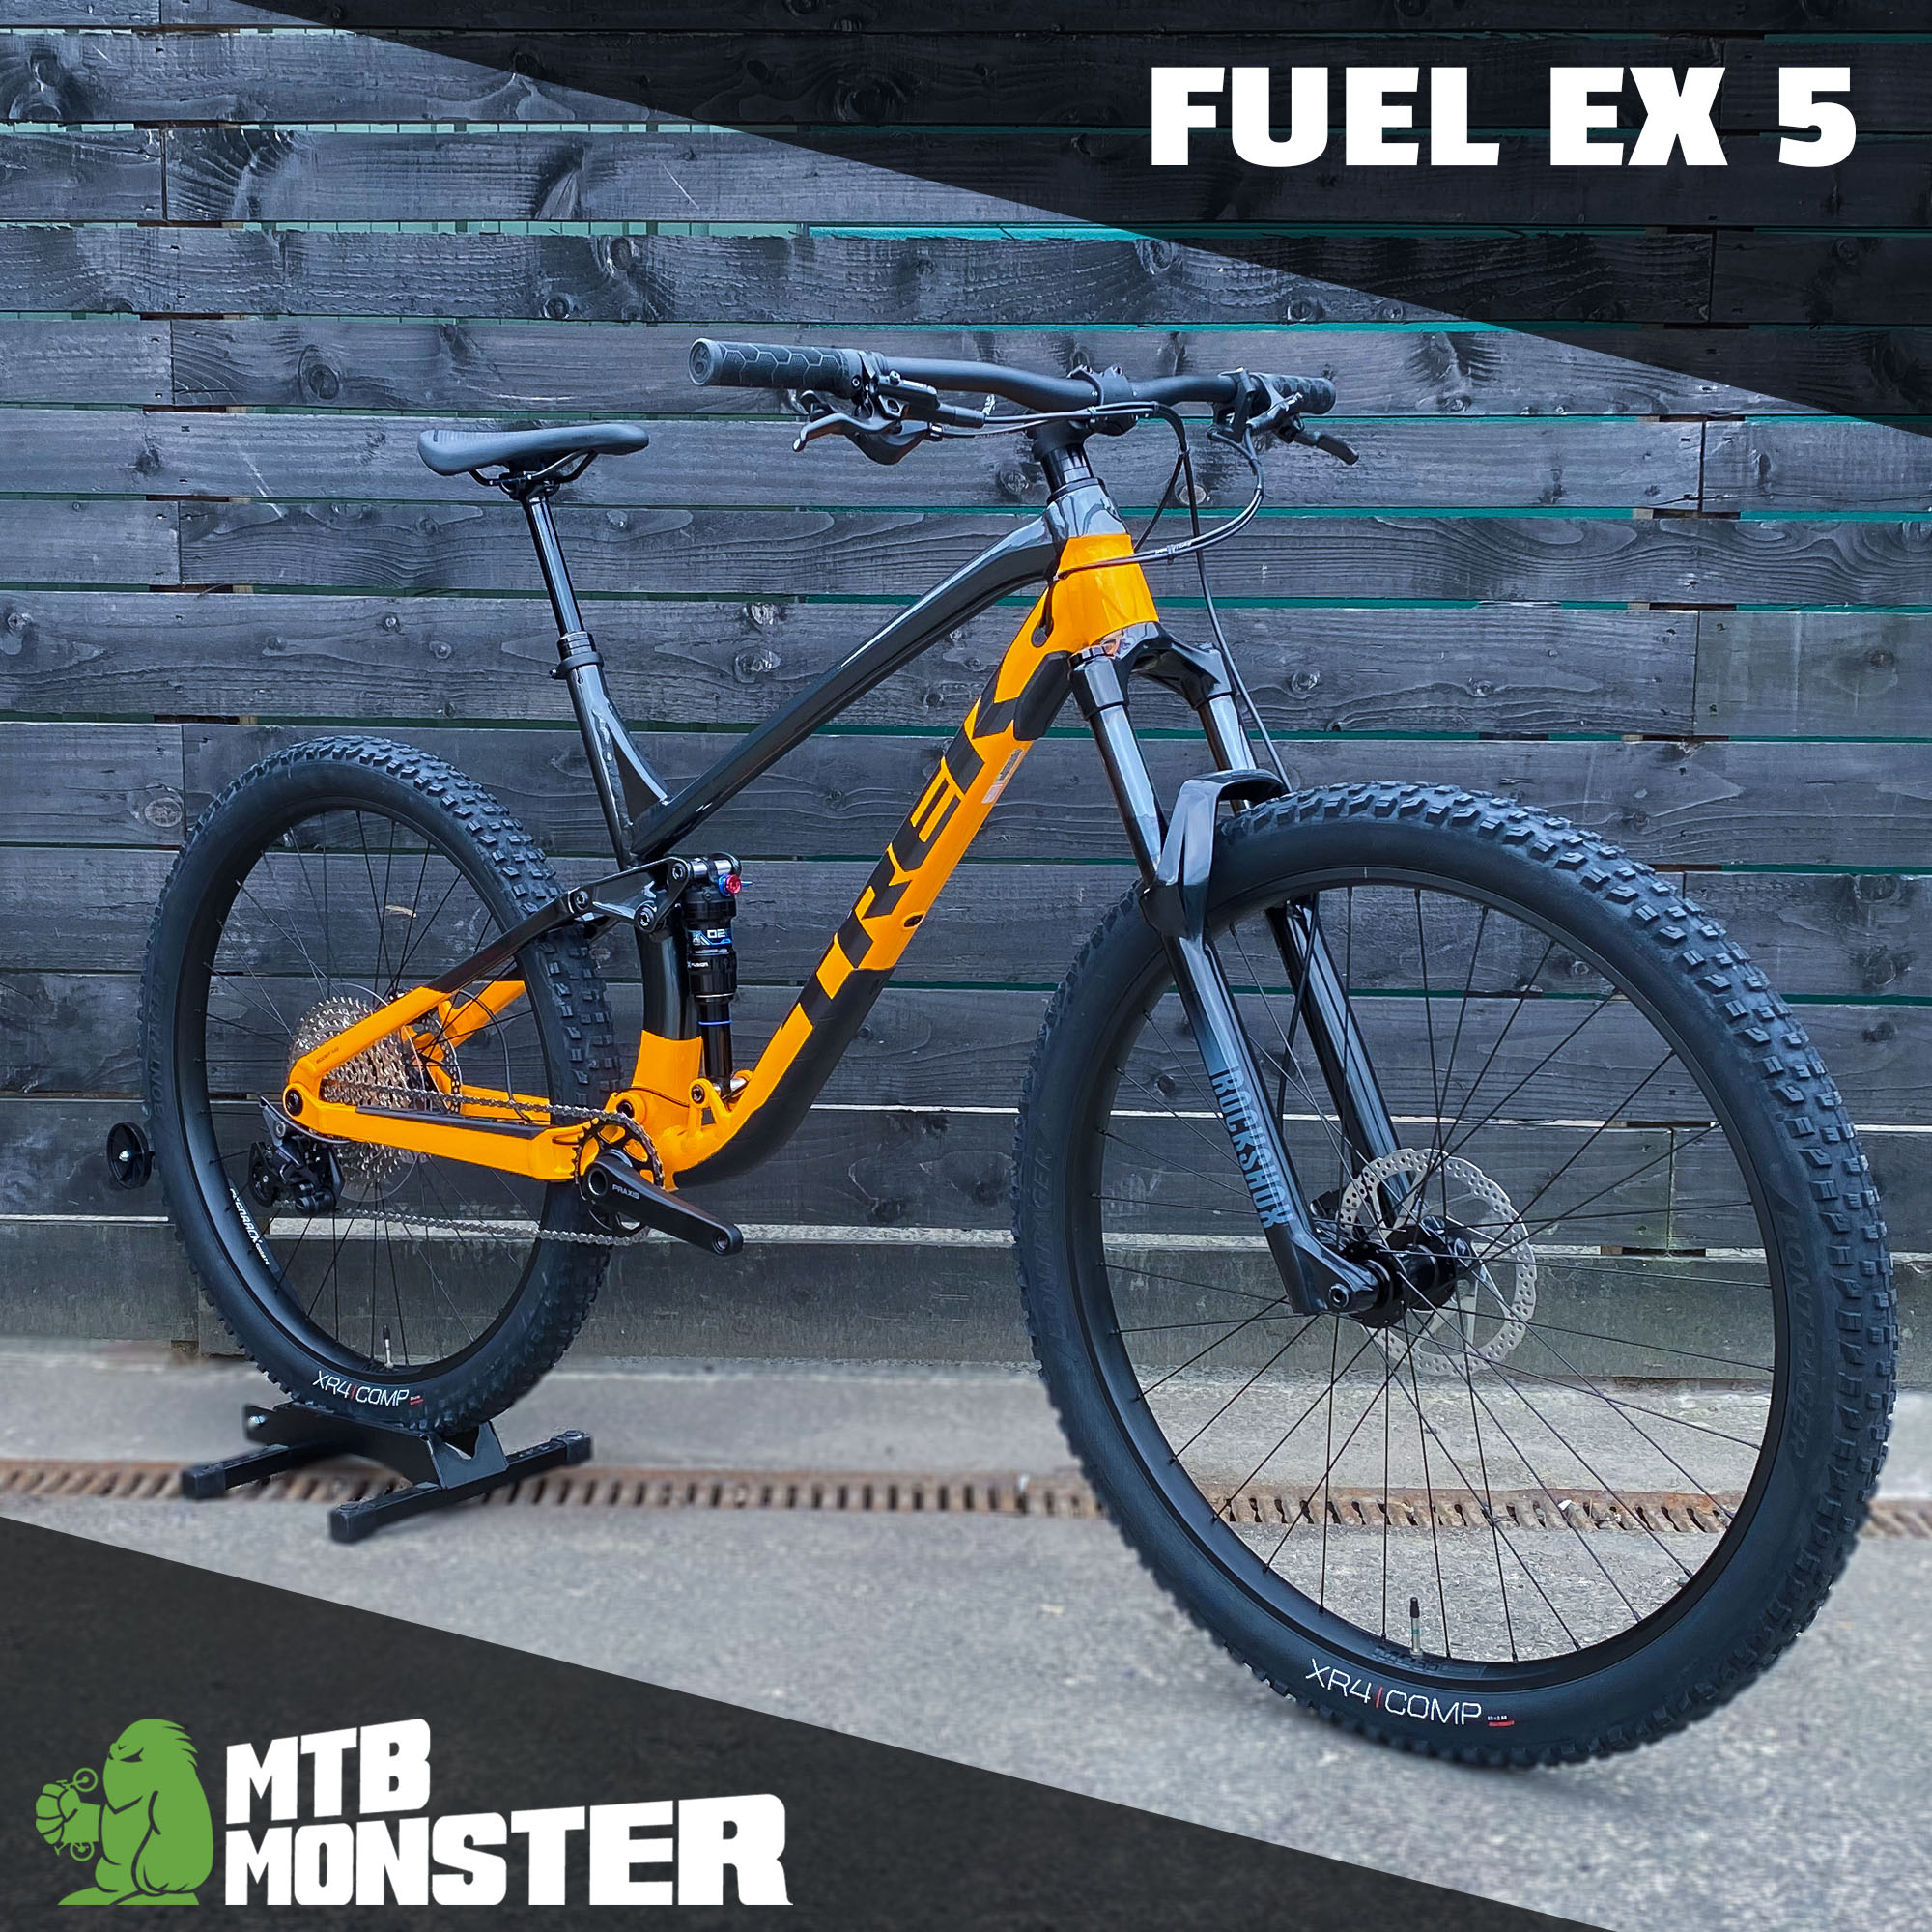 Trek Fuel EX 5... fresh from the